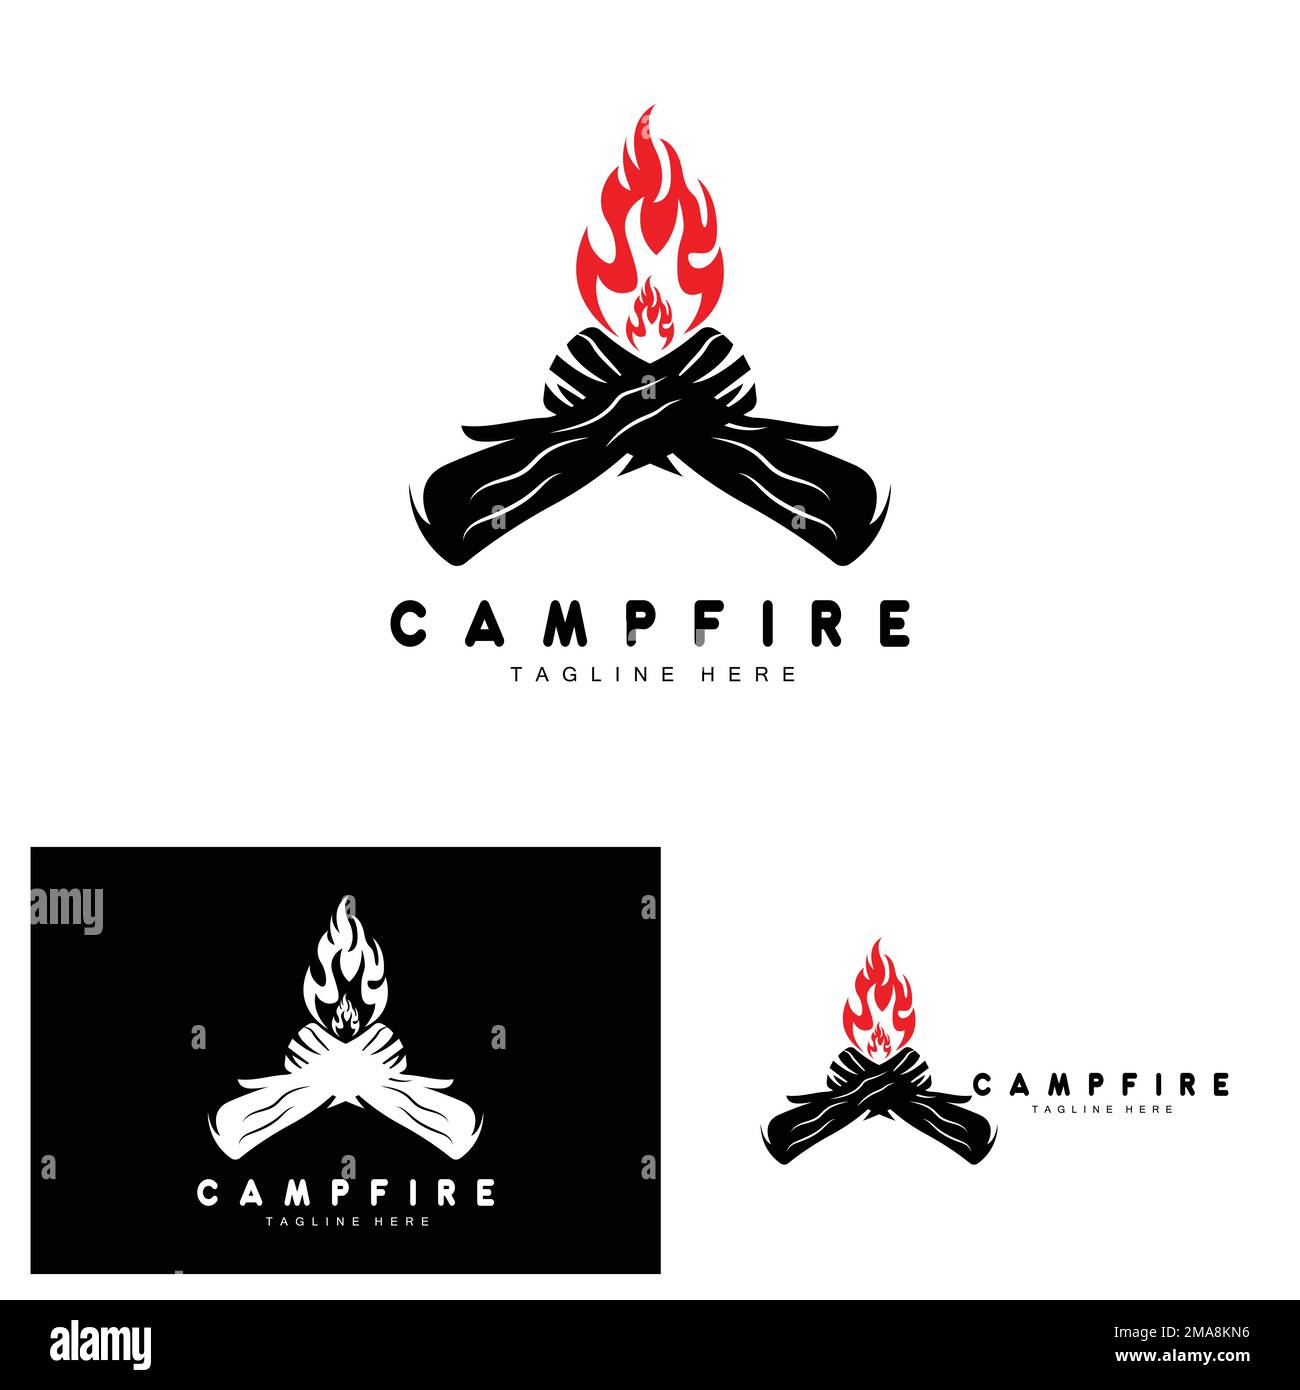 Logo de feu de camp Design, Camping Vector, Wood Fire et Forest Design Illustration de Vecteur